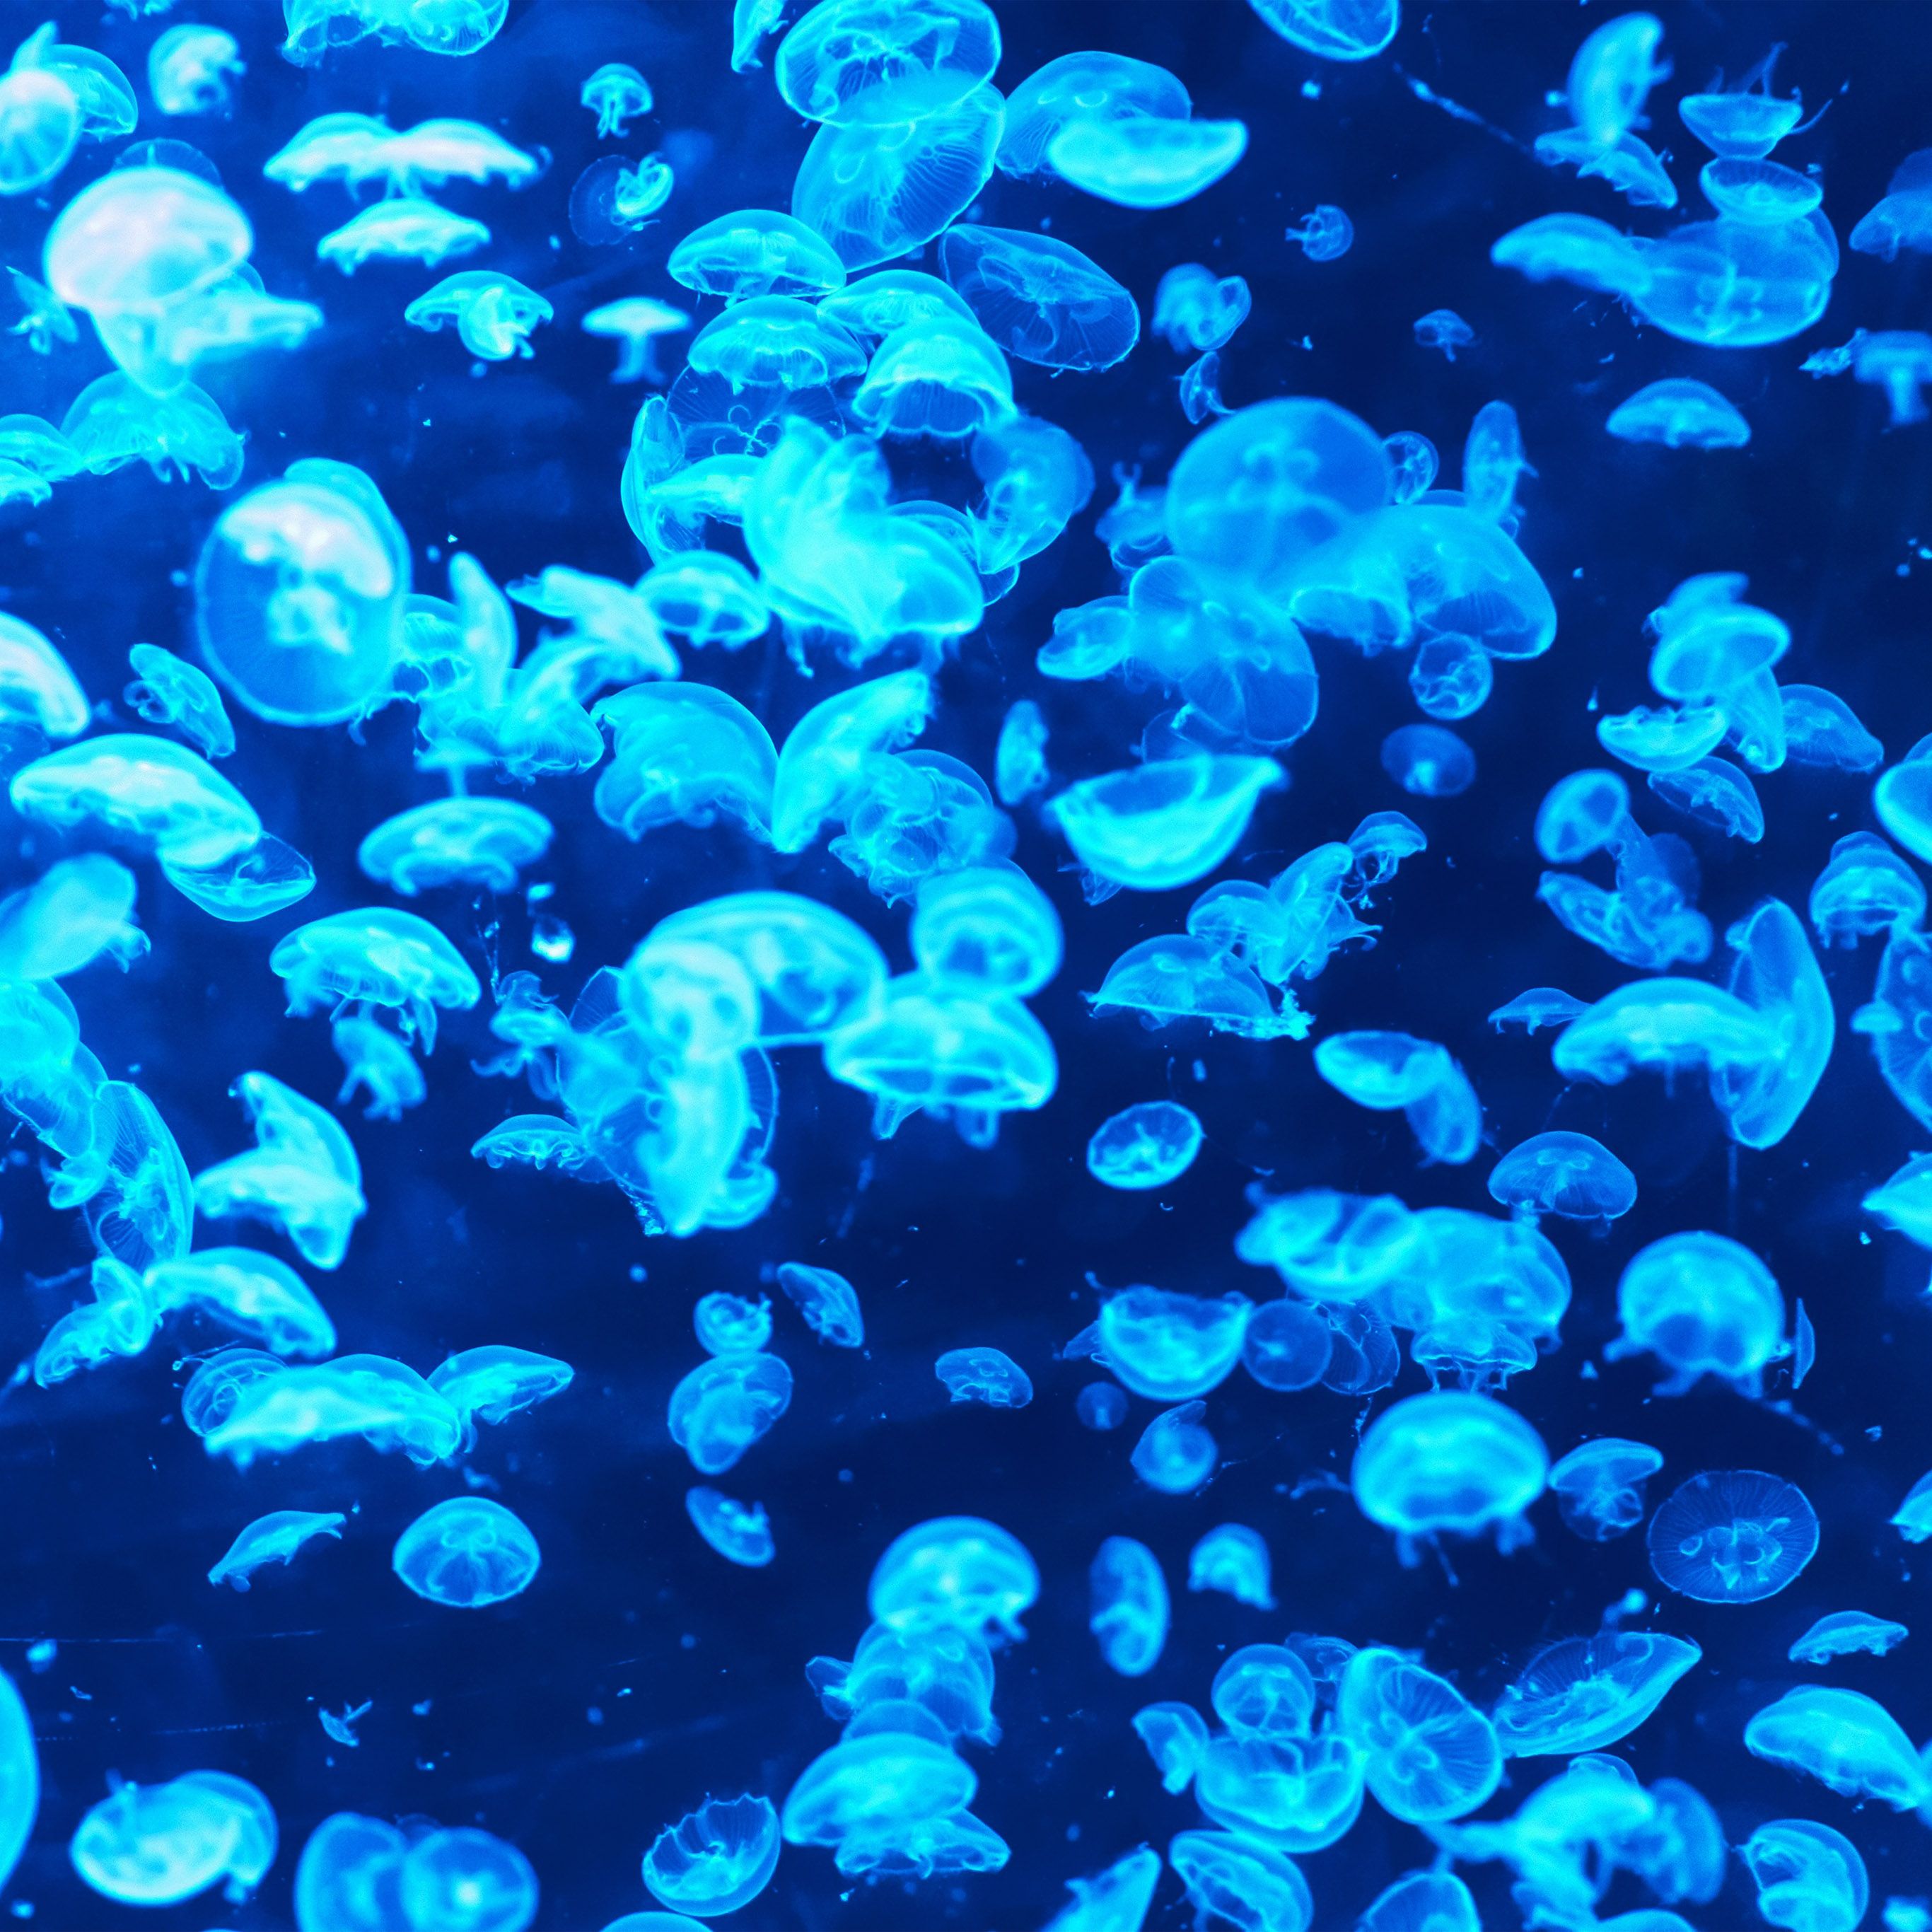 Android wallpaper. animal sea ocean blue jellyfish pattern lot